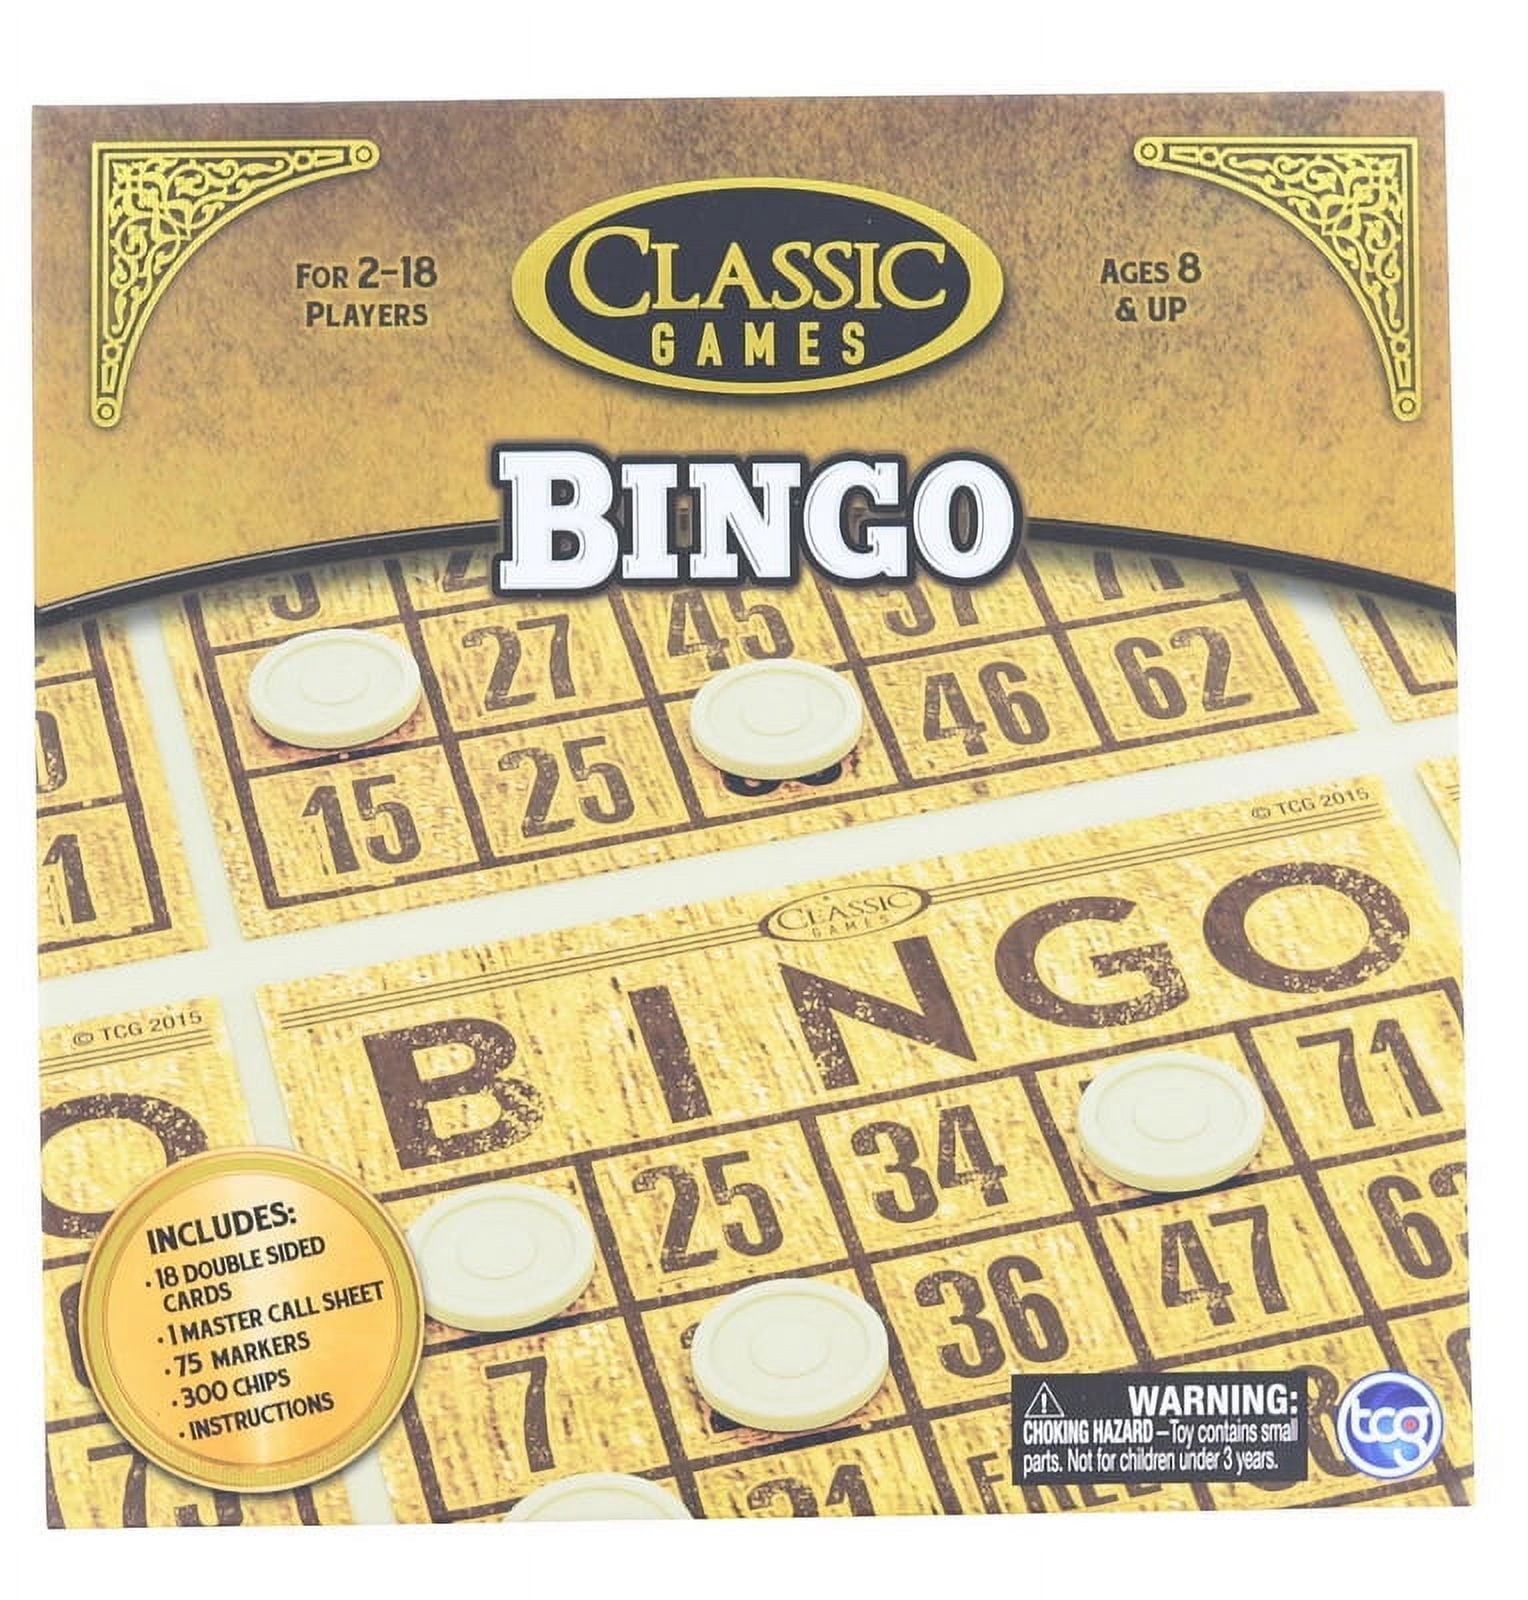 Essential bingo card markers for a Fun, Classic Game 